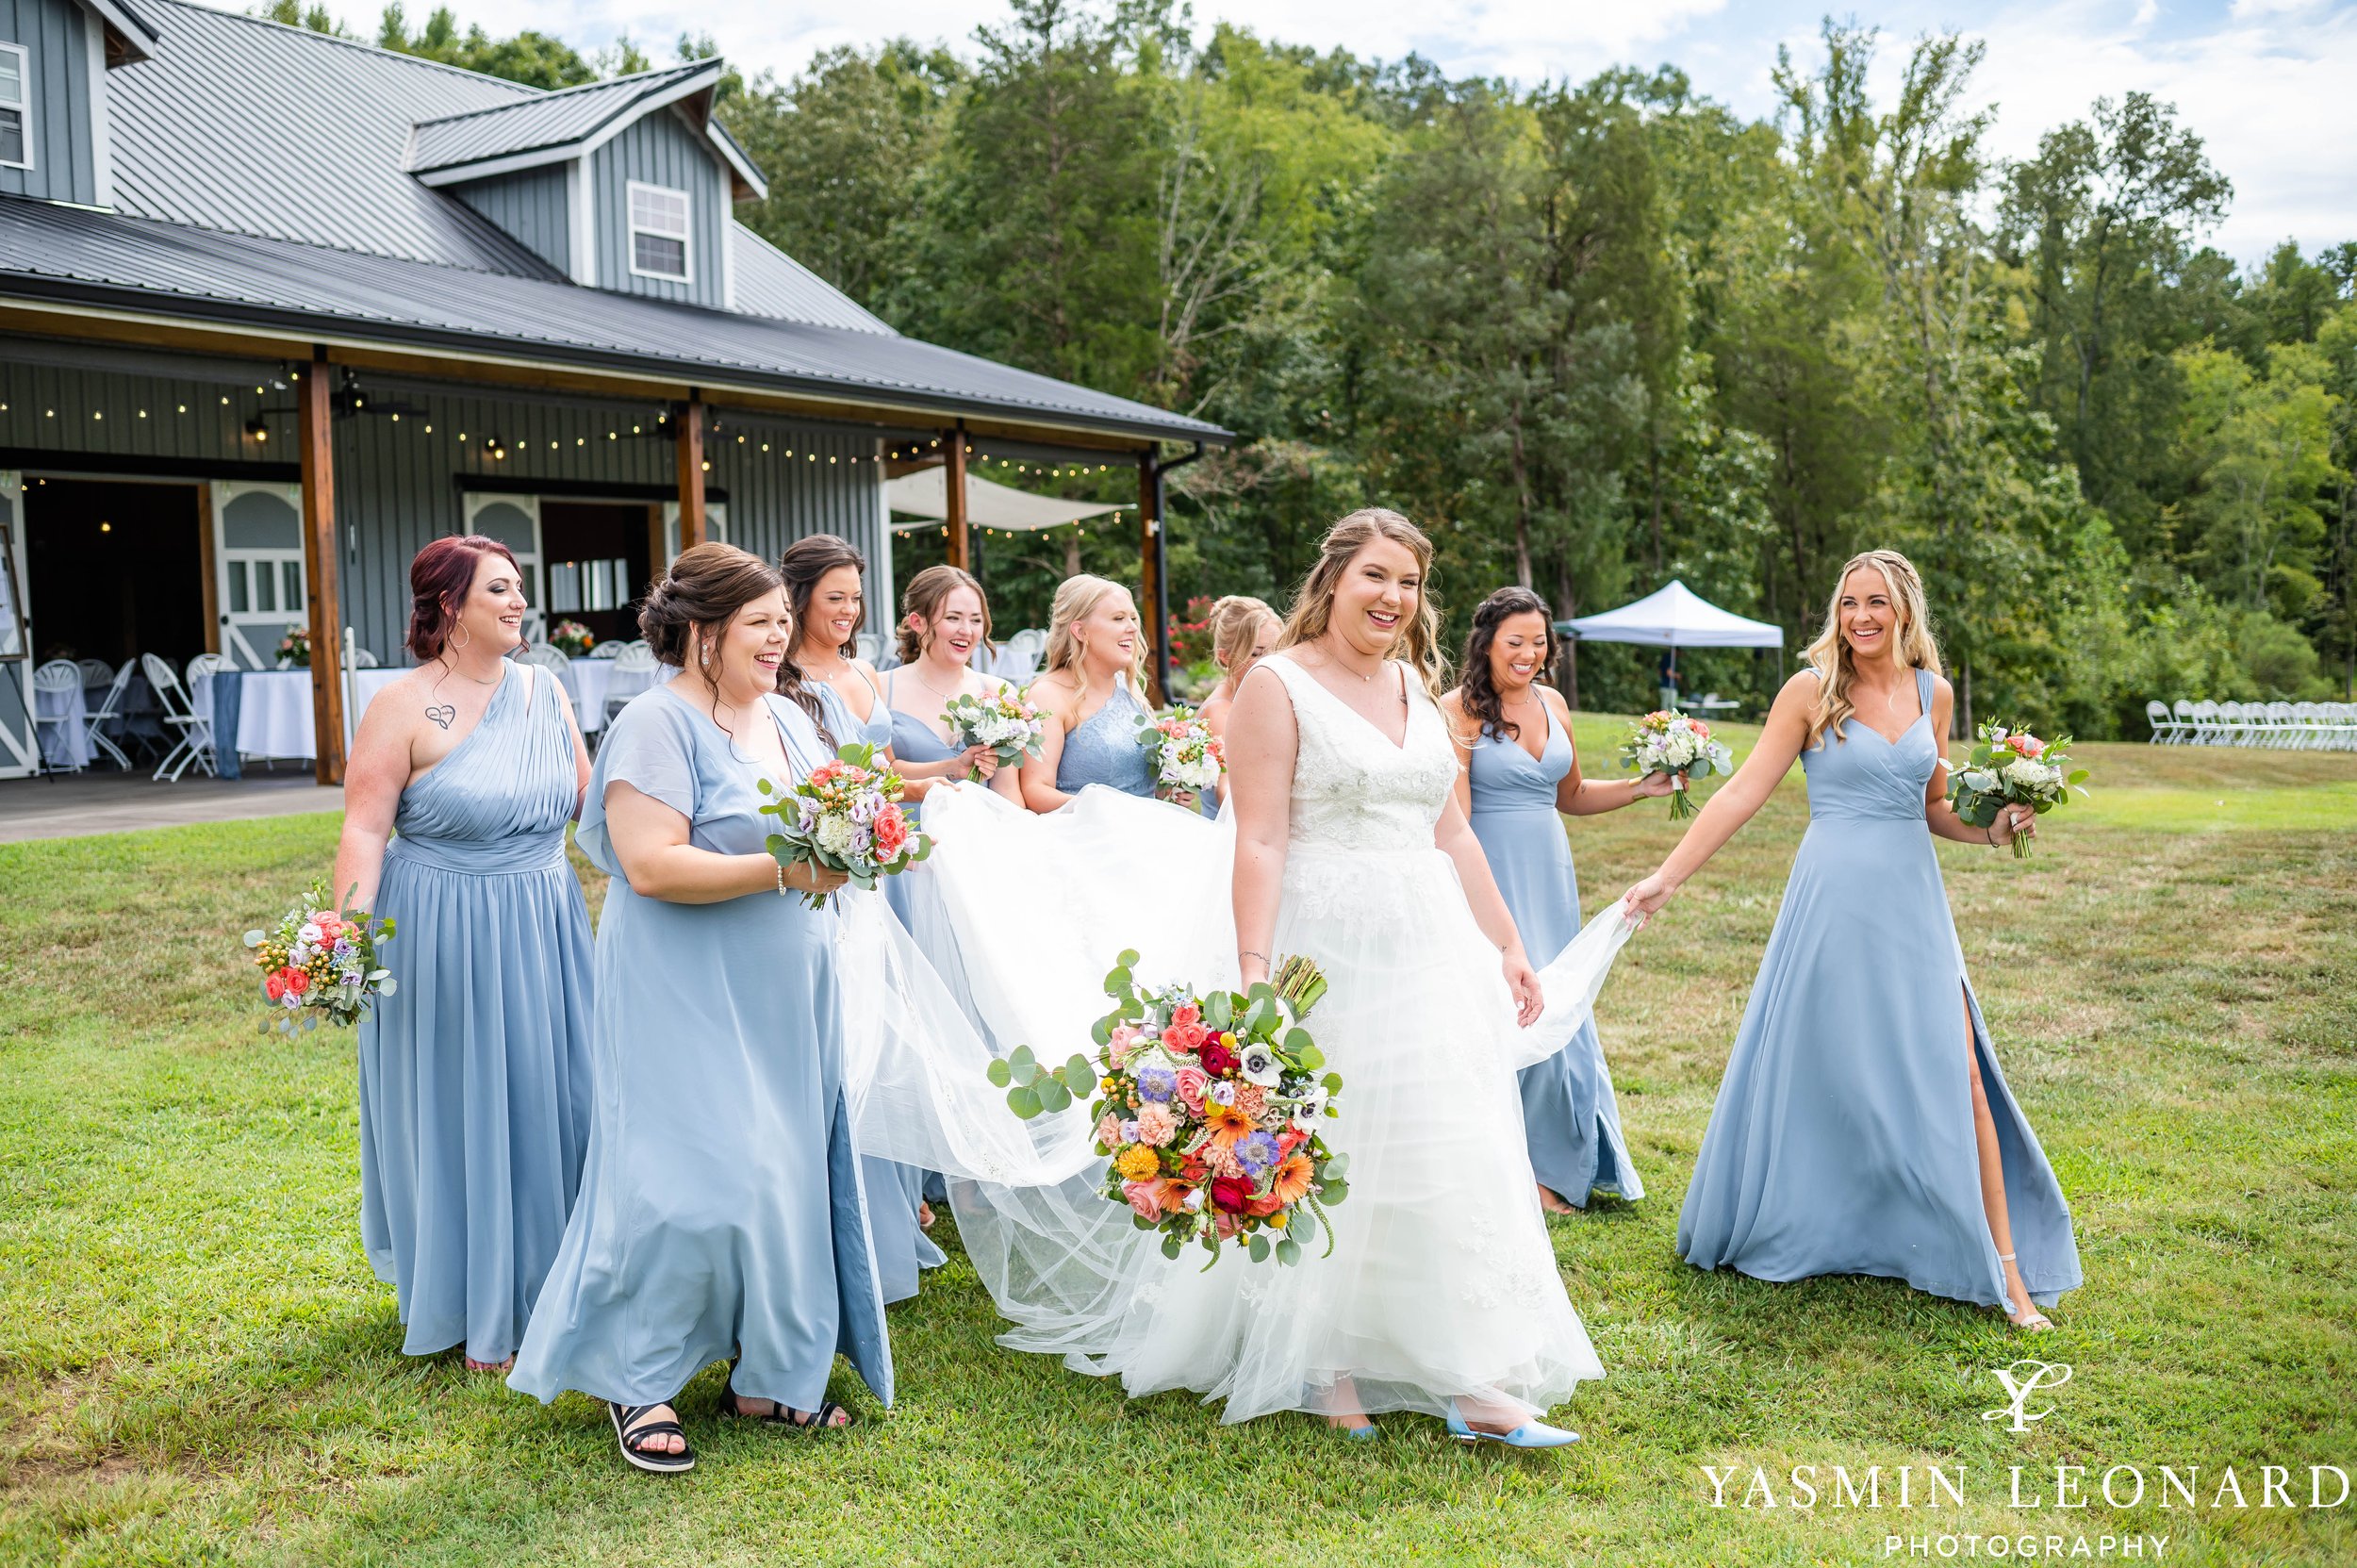 Secret Meadows at Green Dell Farm - Wedding in Thomasville - Barn Wedding in the Triad - High Point Wedding Photographer - Yasmin Leonard Photography -4.jpg